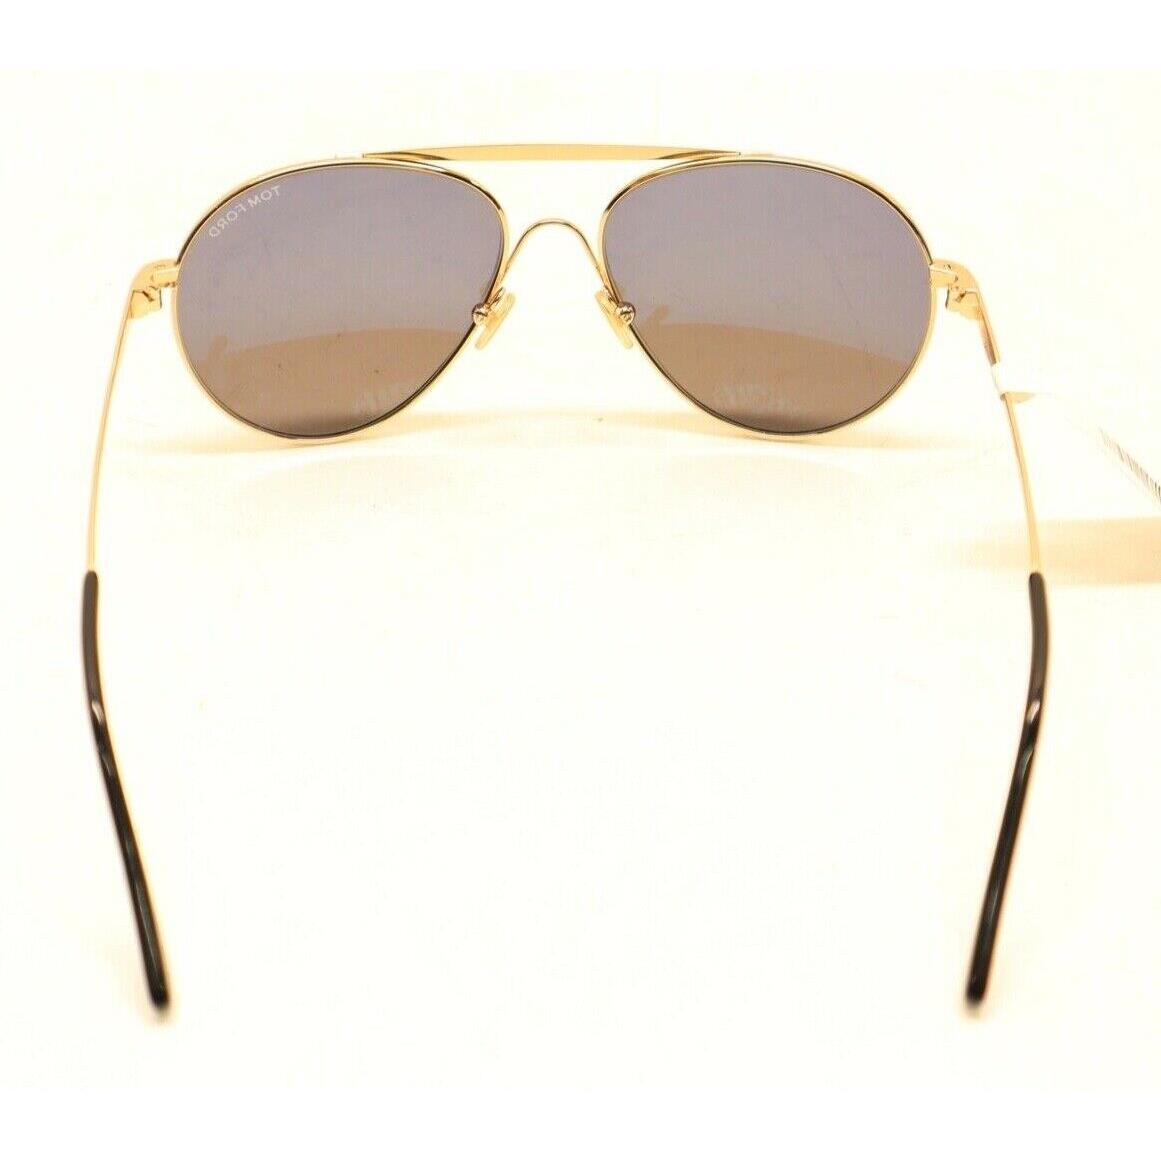 Tom Ford sunglasses SMITH - Gold Frame, Gray Lens